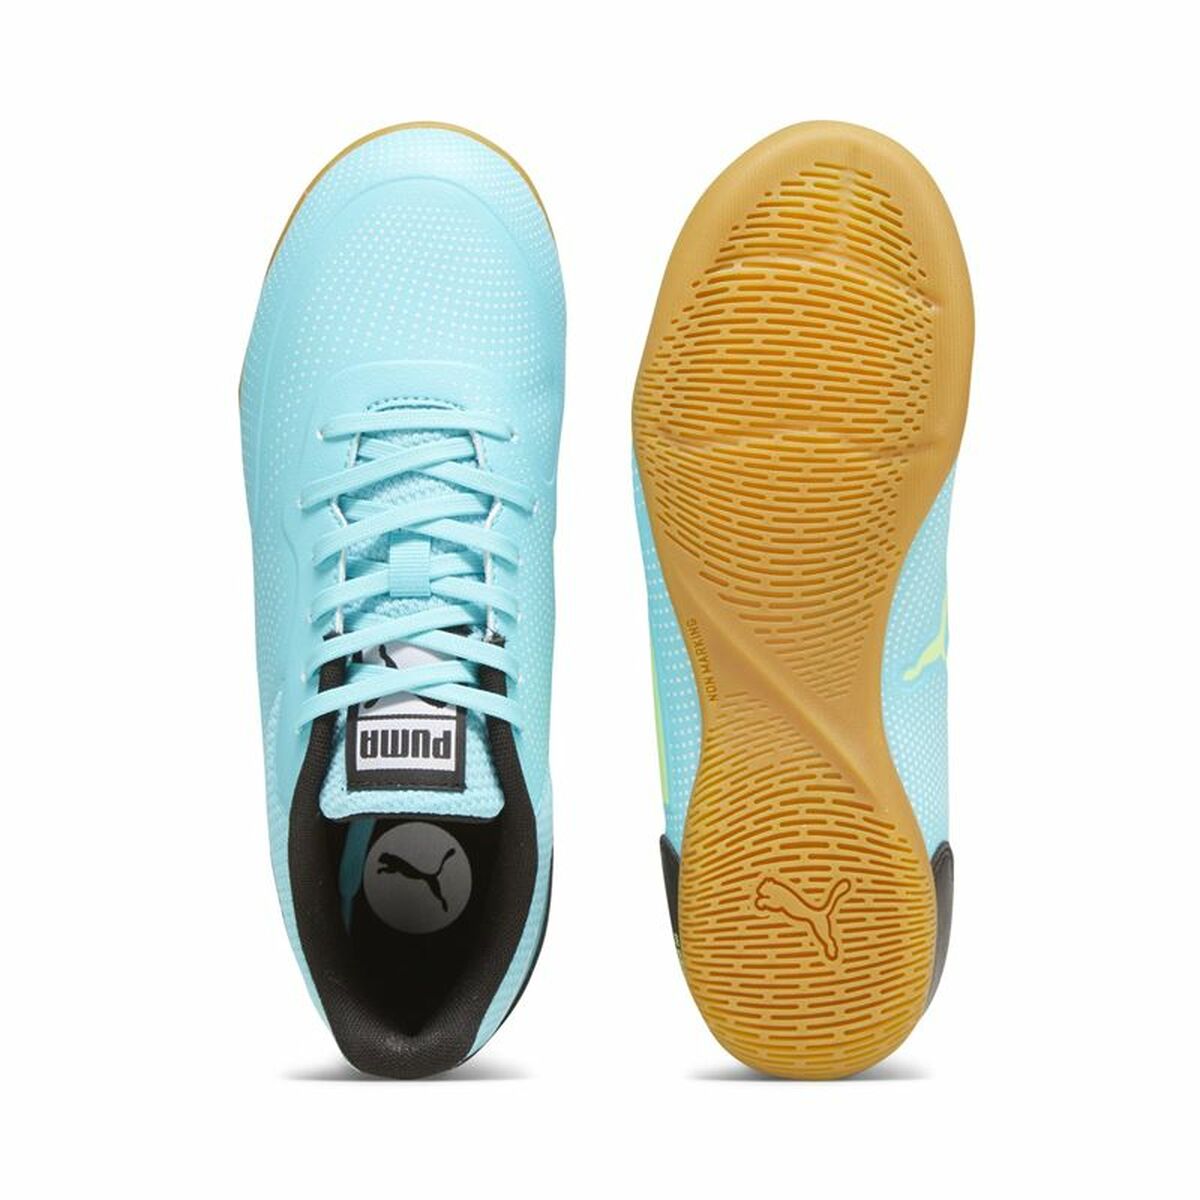 Children's Indoor Football Shoes Puma Truco III  Unisex Blue